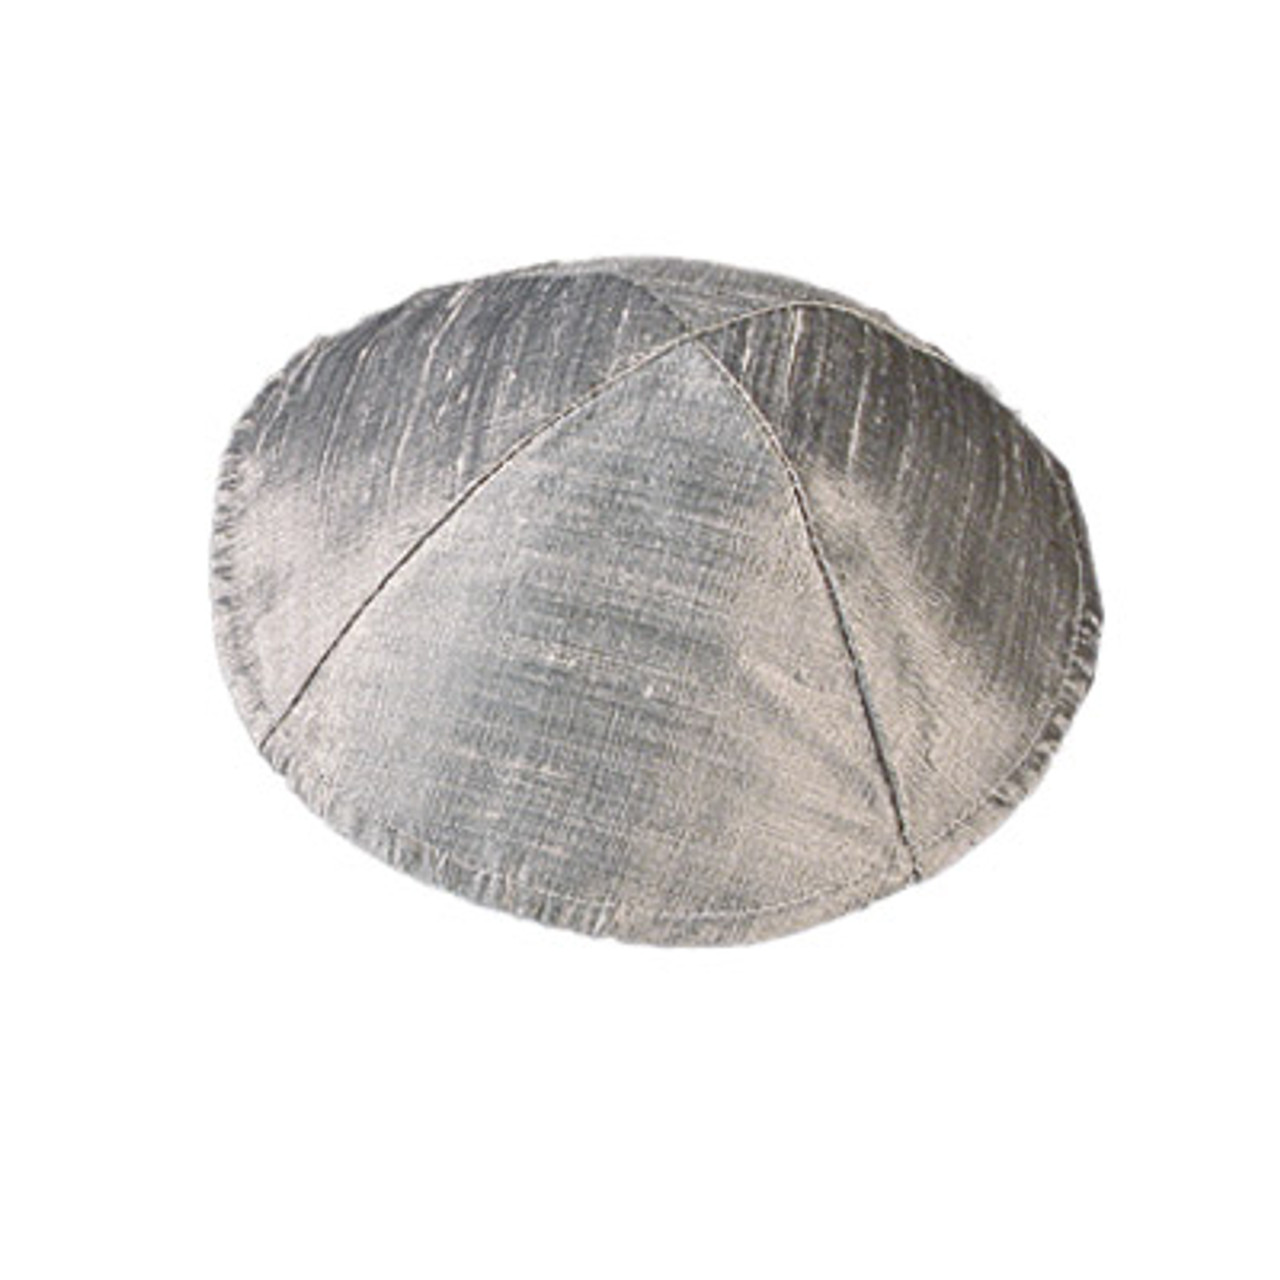 Matching Kippah - Yair Emanuel raw silk silver kippah